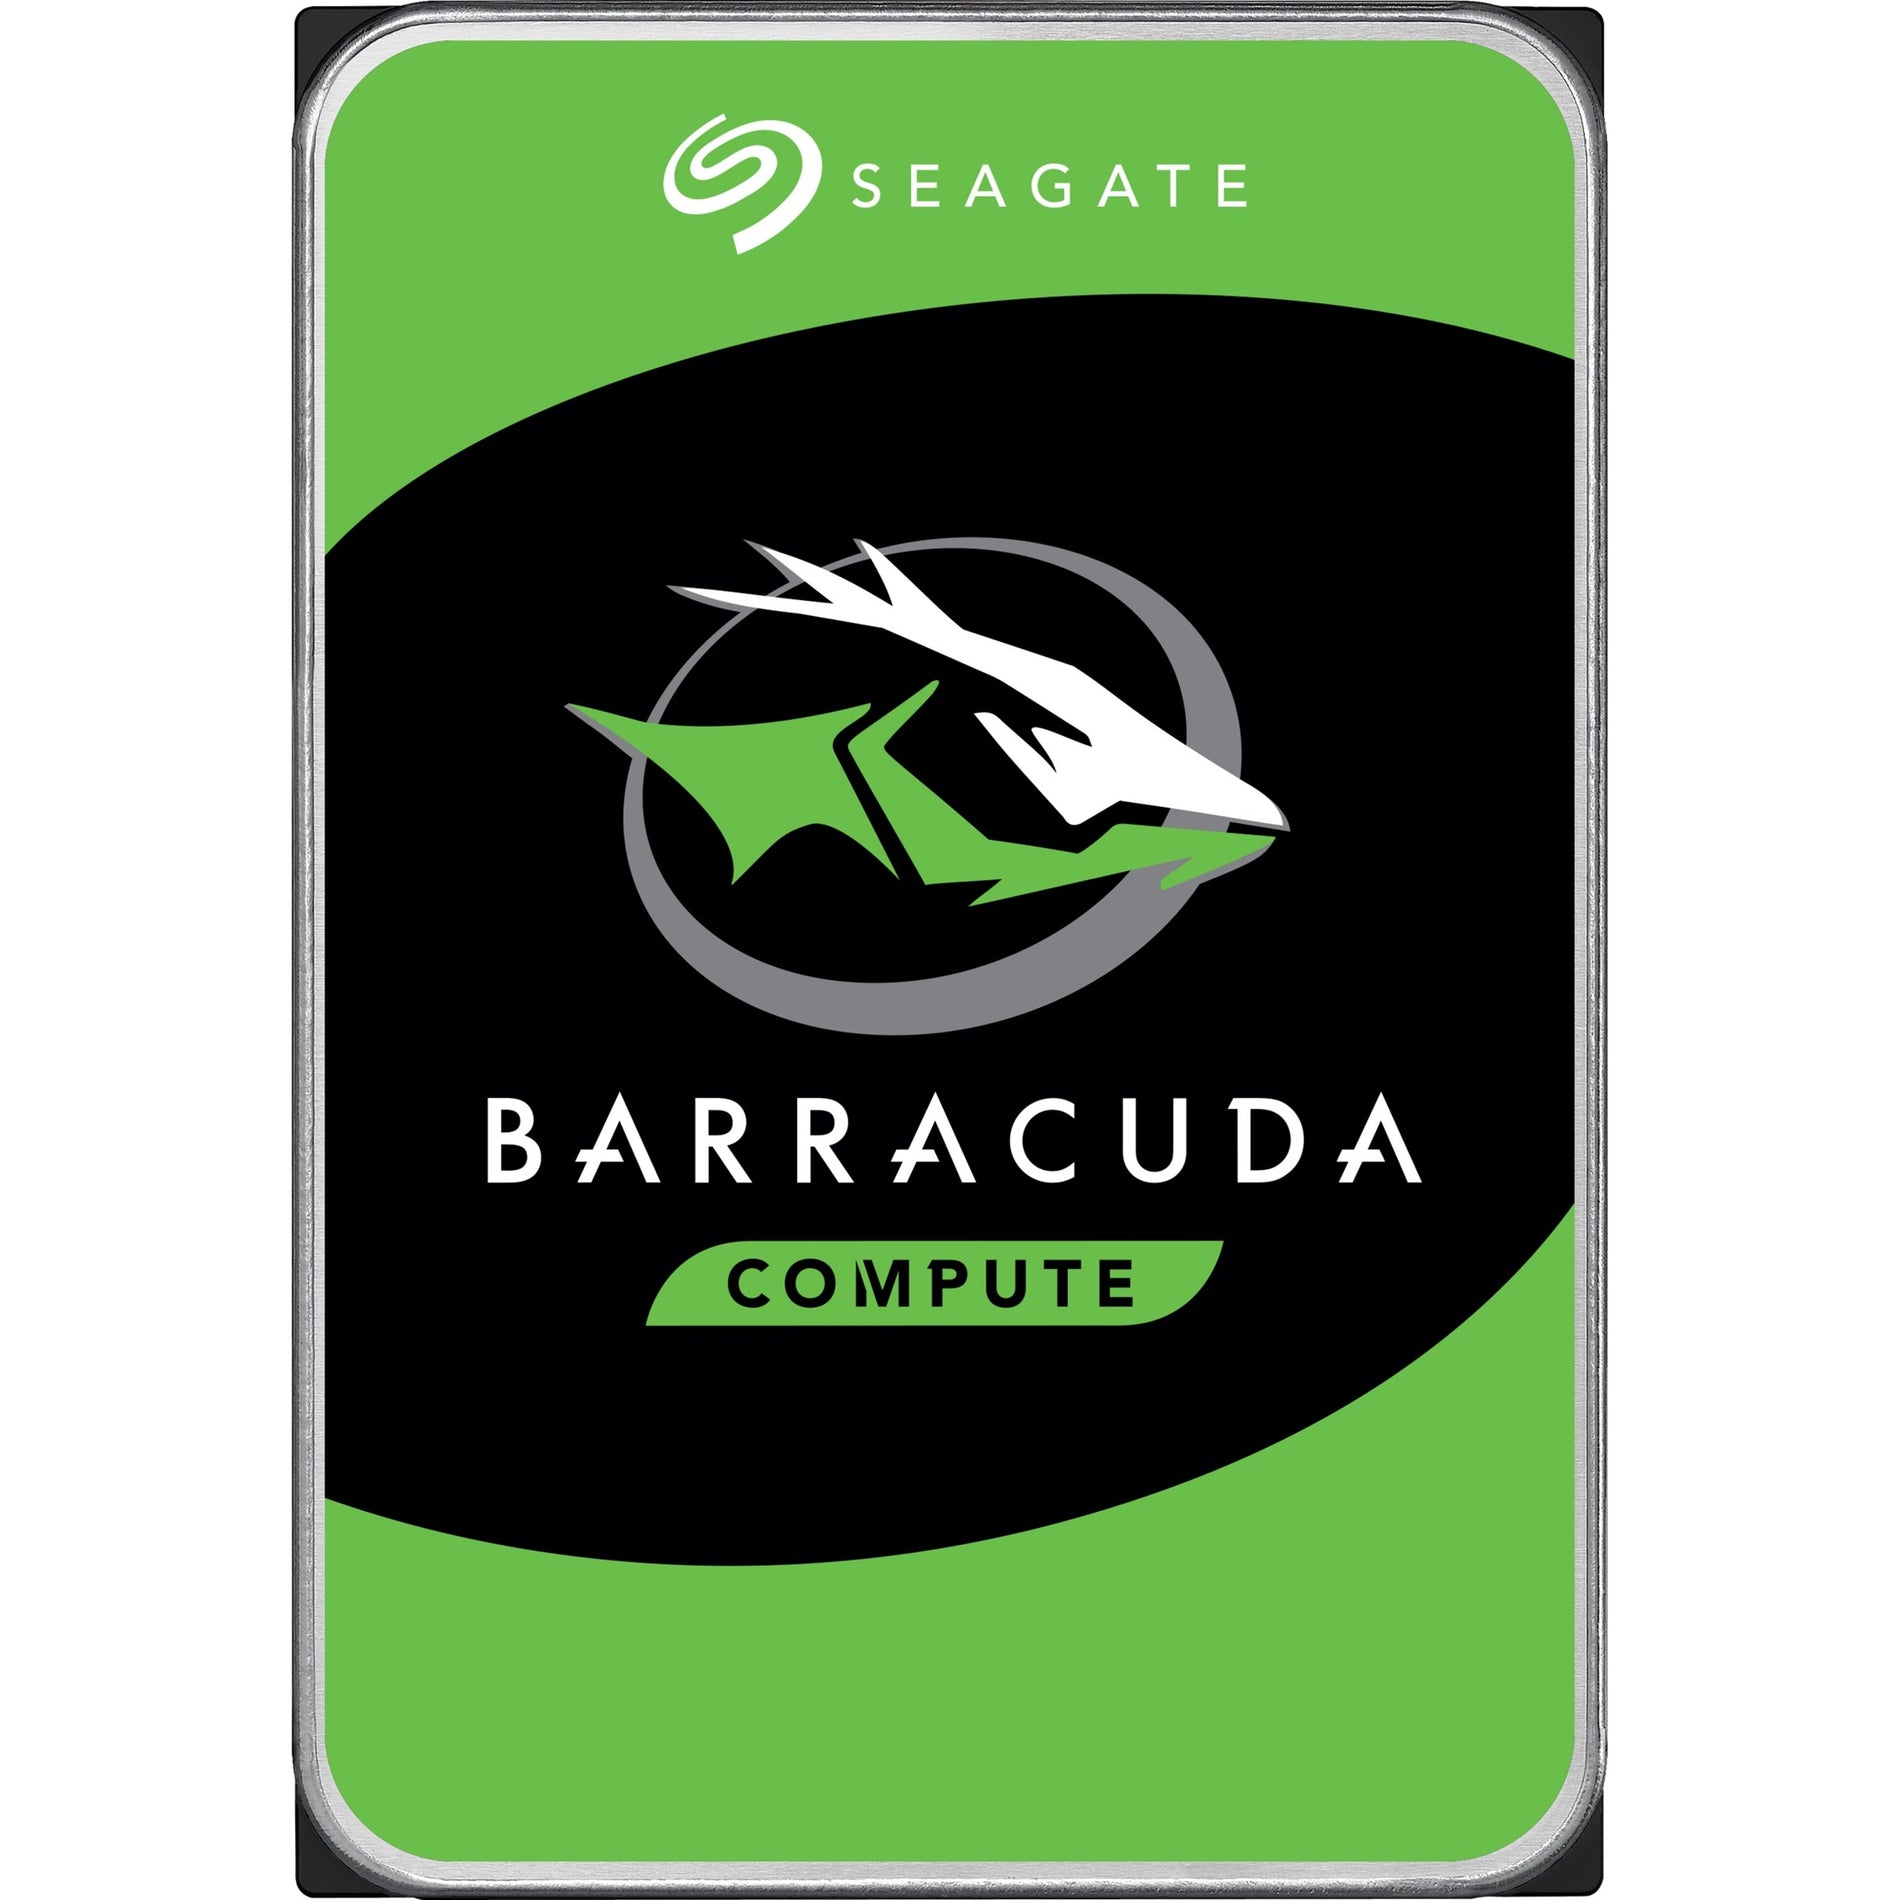 Seagate ST8000DM004 Barracuda 8TB Hard Drive, High Capacity Storage Solution